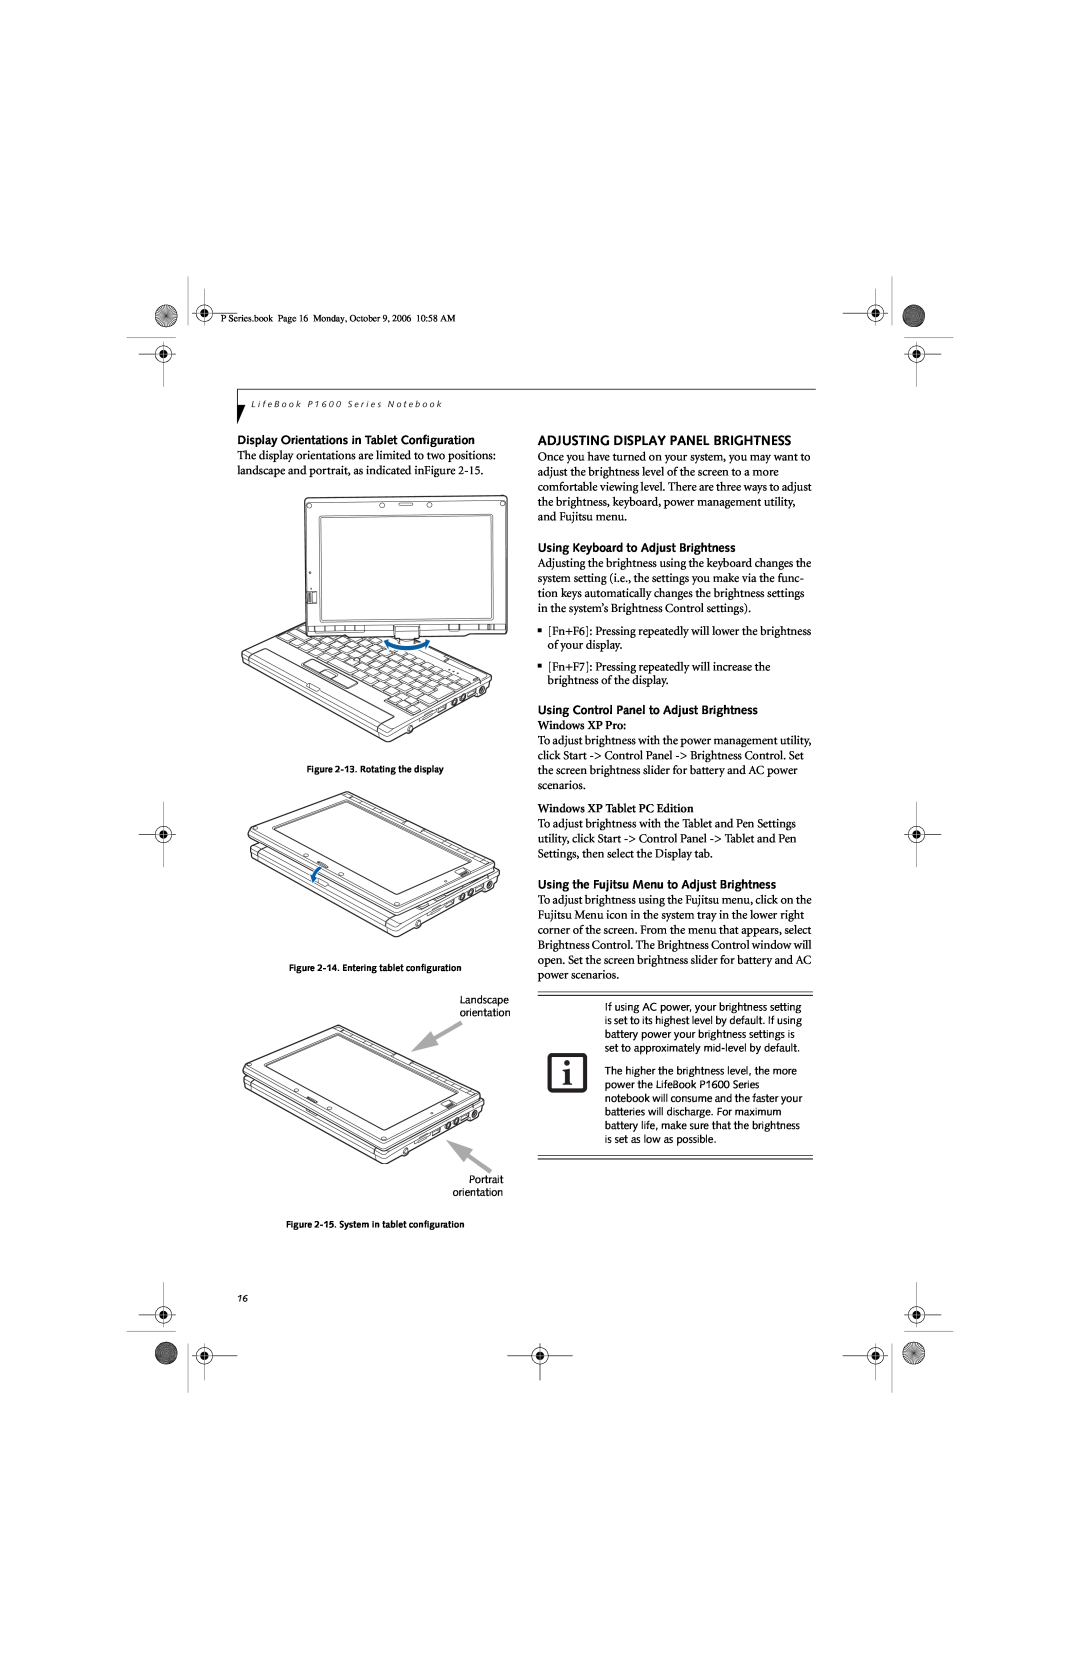 Fujitsu P1610 manual Adjusting Display Panel Brightness, Display Orientations in Tablet Configuration, Windows XP Pro 